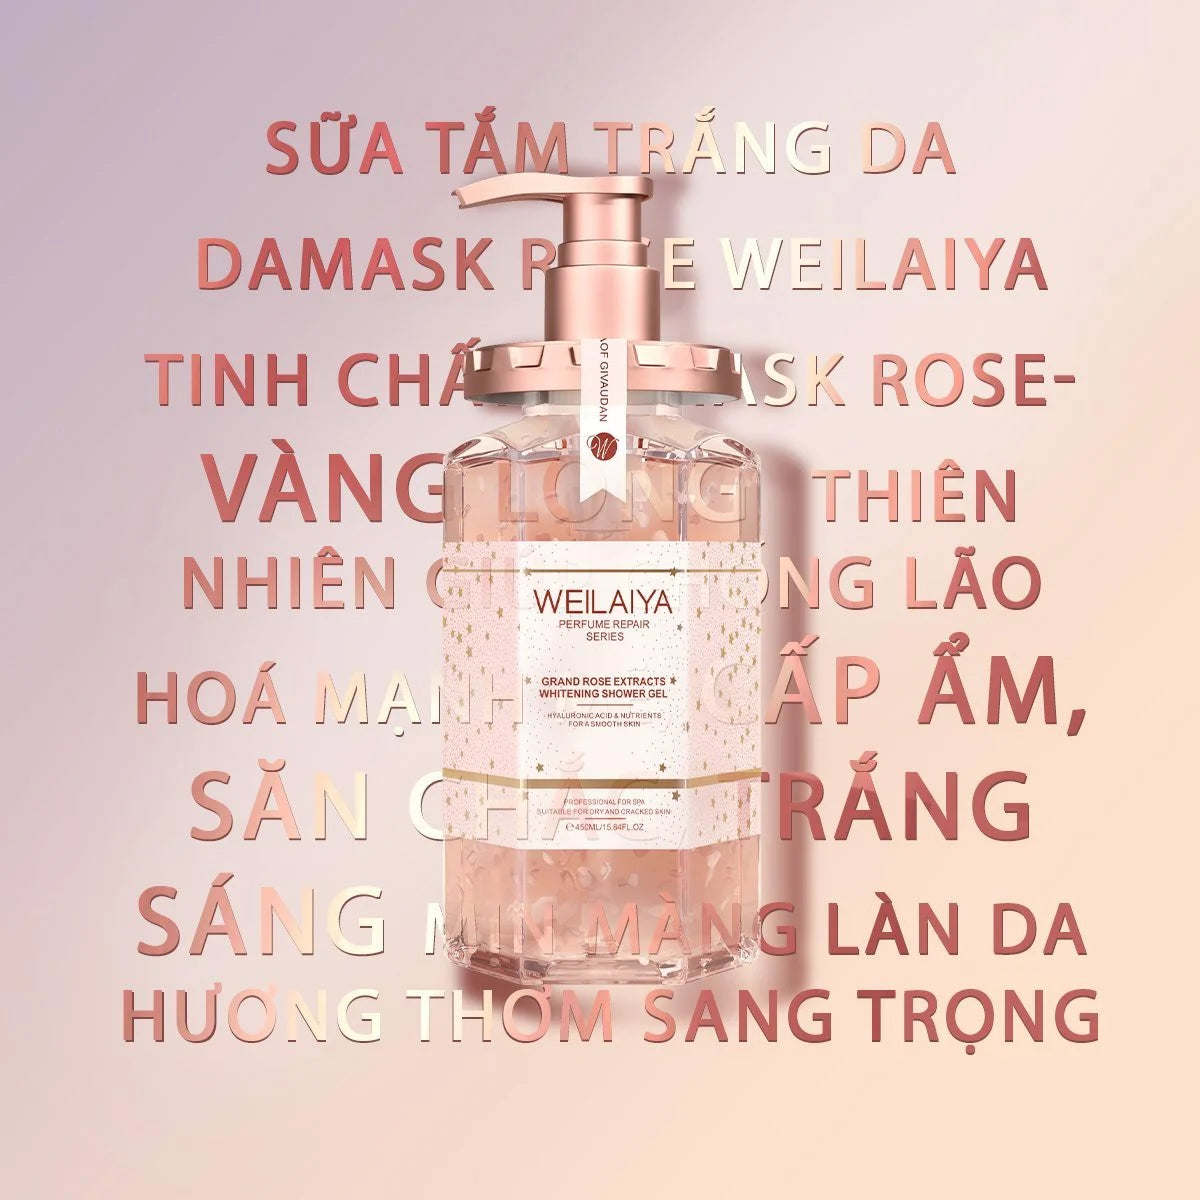 Weilaiya Grand Rose Extracts Whitening Shower Gel - 450 ml